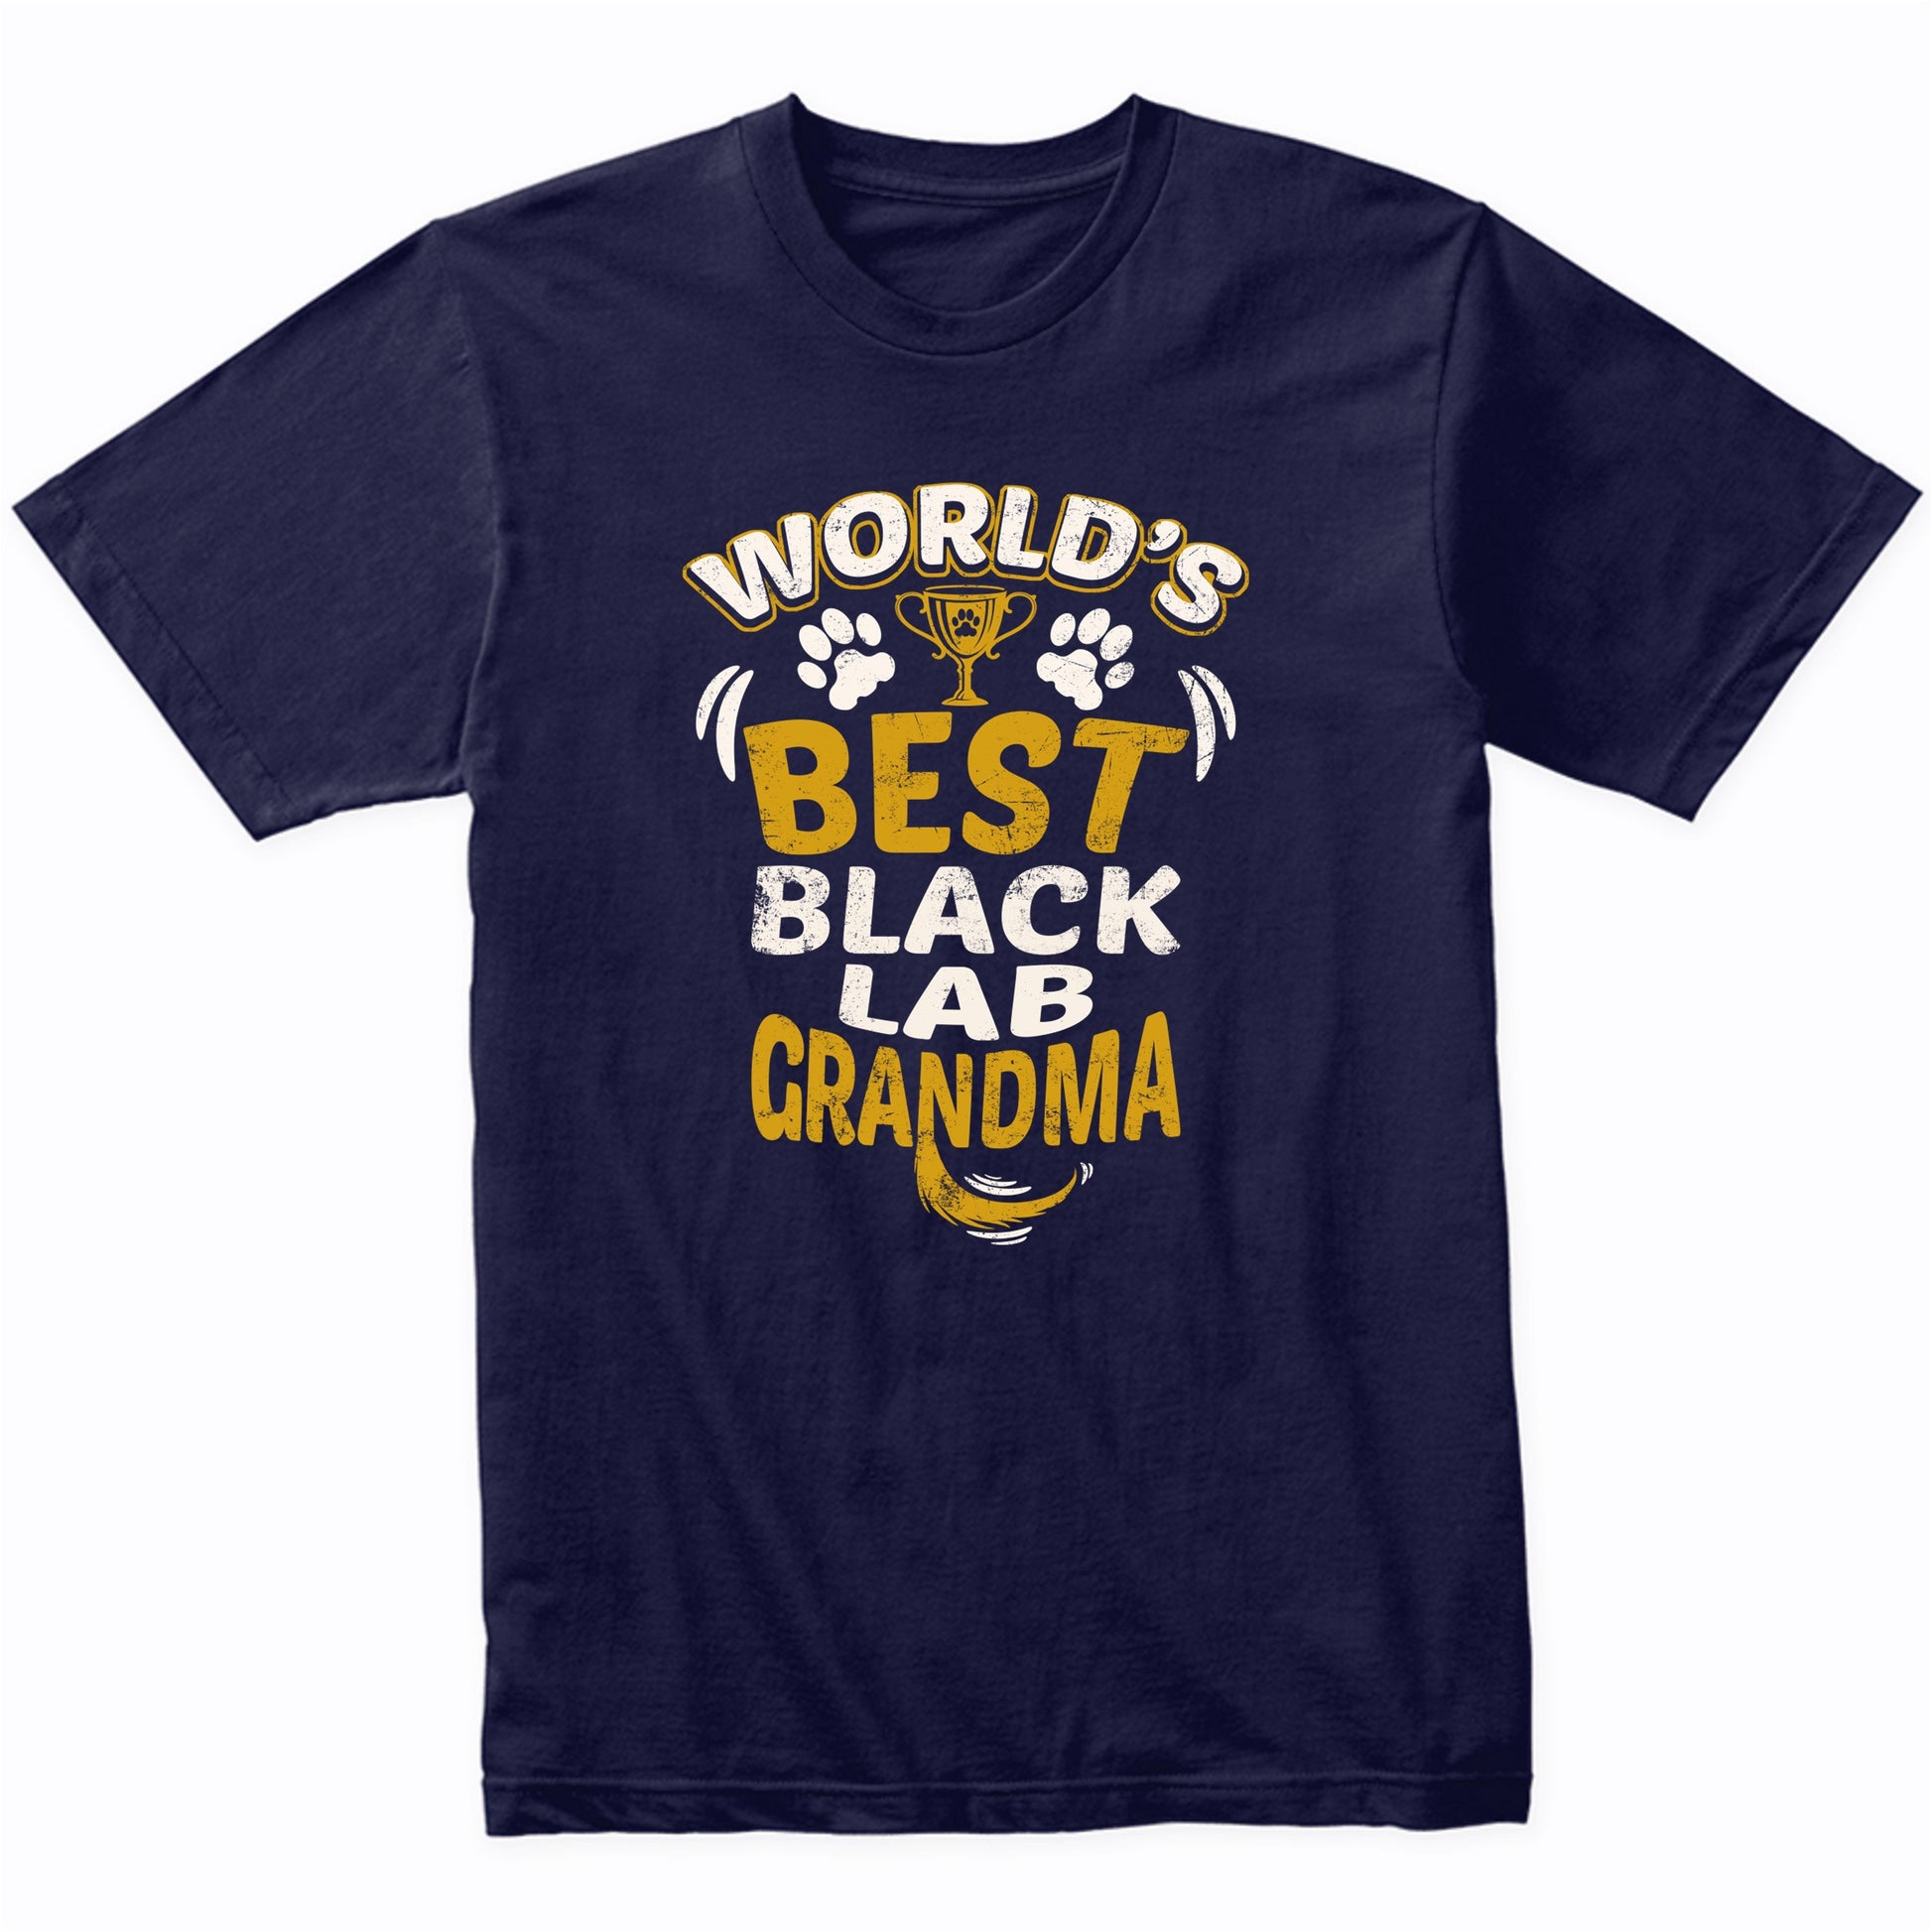 World's Best Black Lab Grandma Graphic T-Shirt